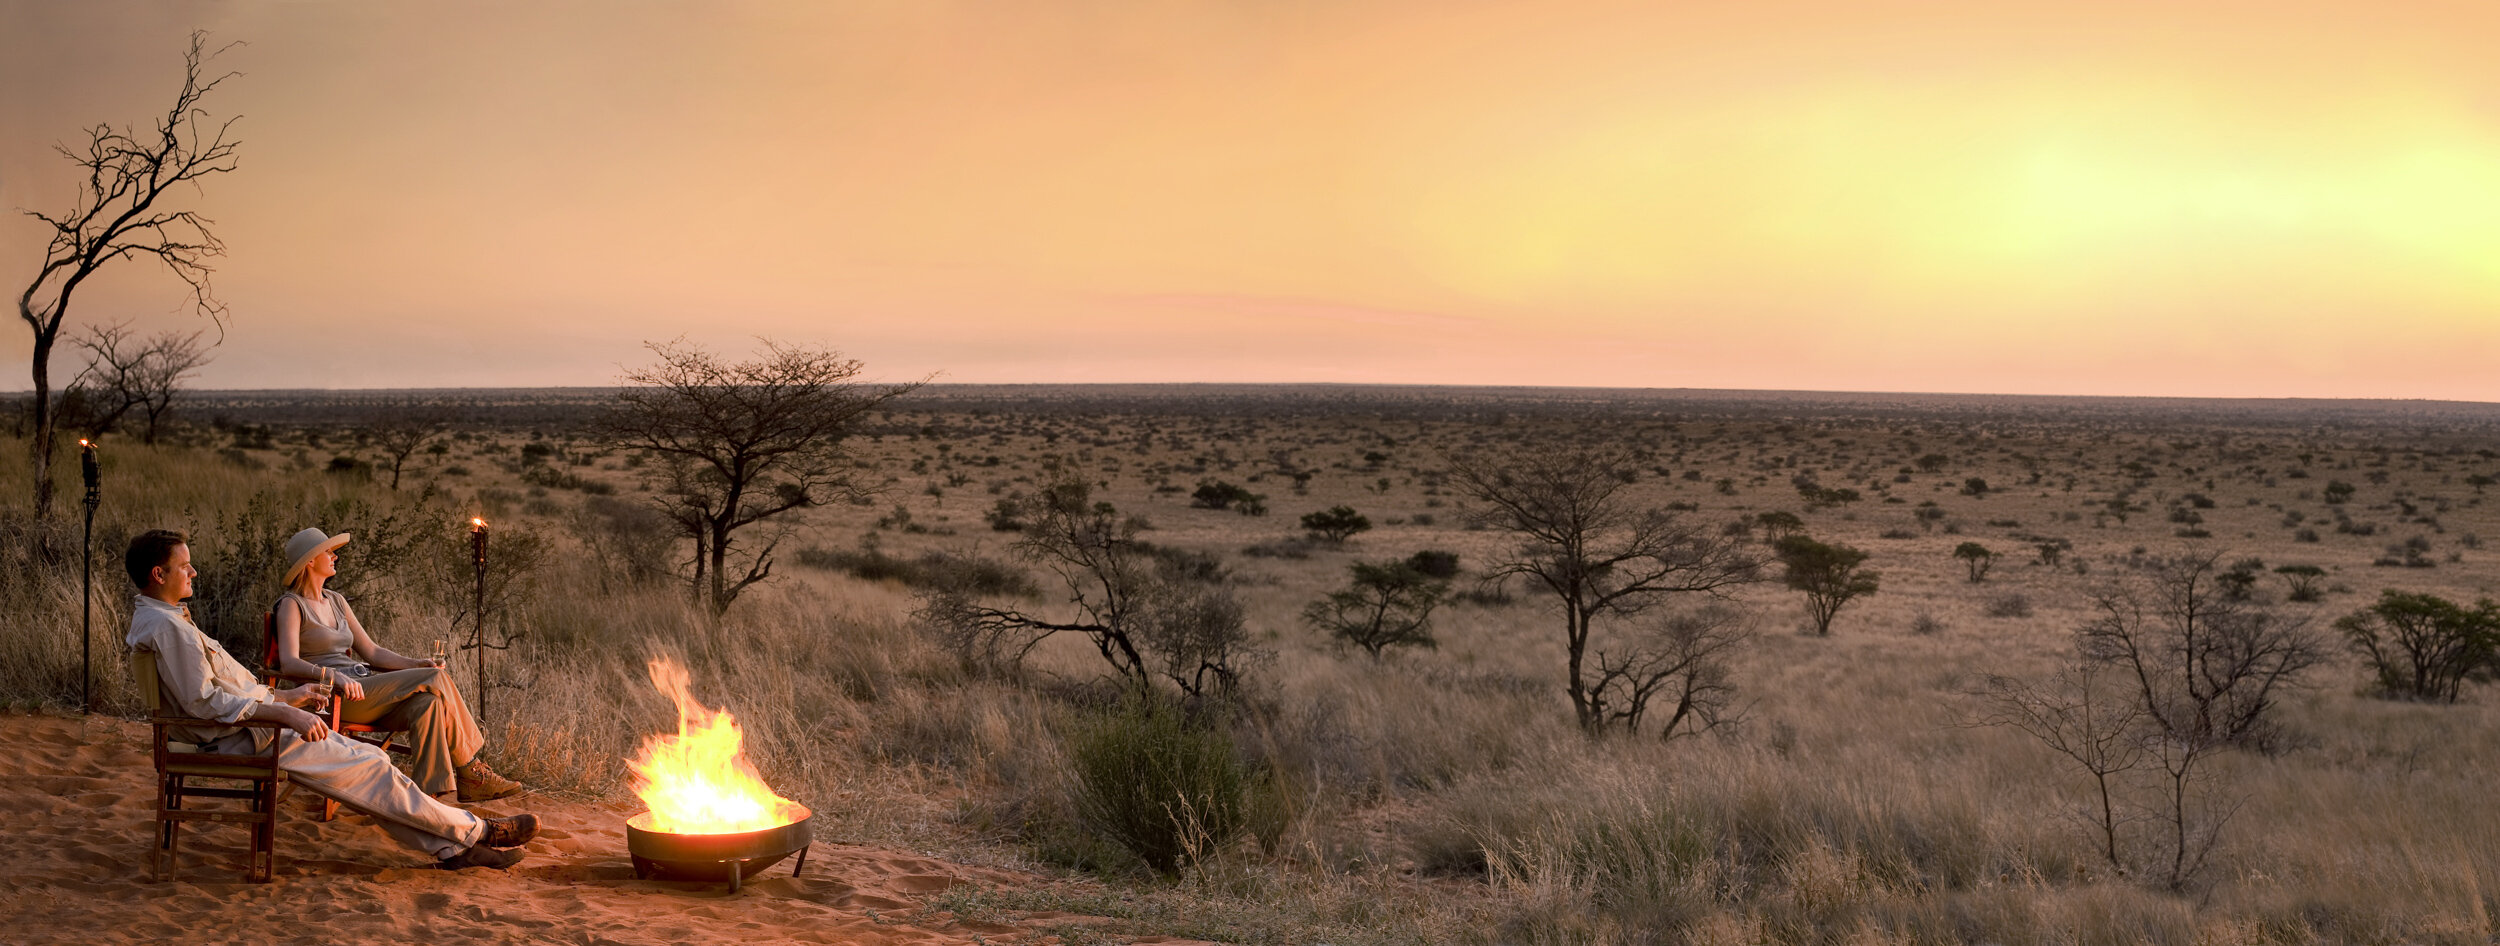 Sunset over the Kalahari.jpg